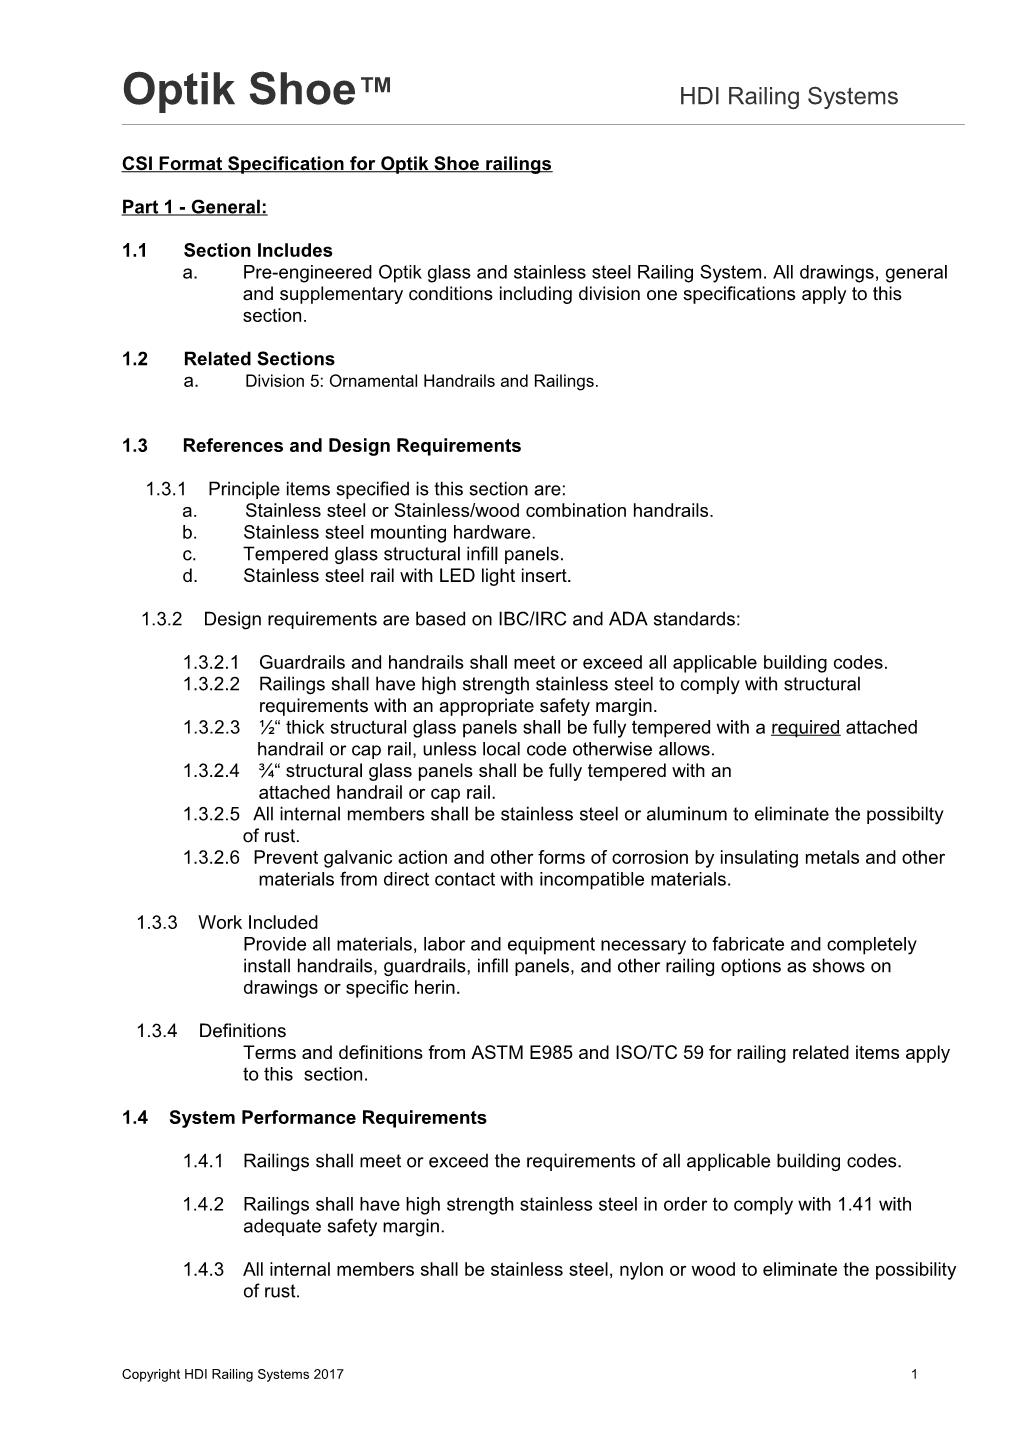 CSI Format Specification for Optik Shoe Railings